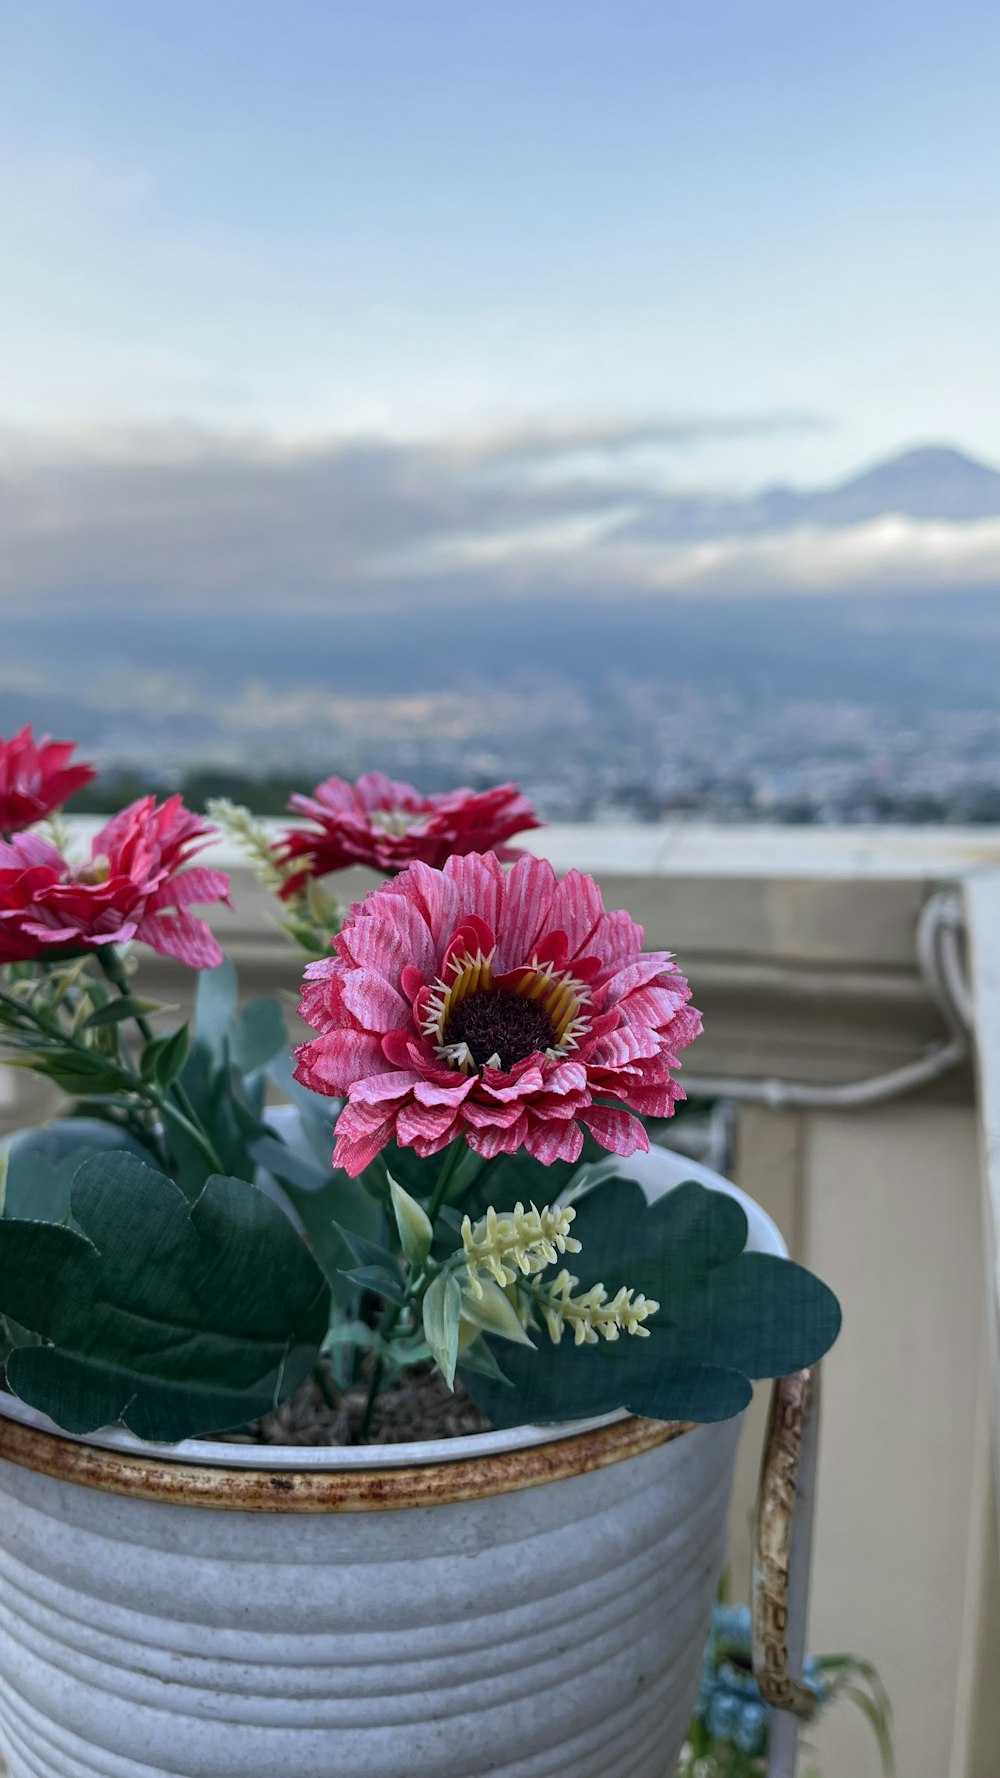 a pot of flowers on a balcony